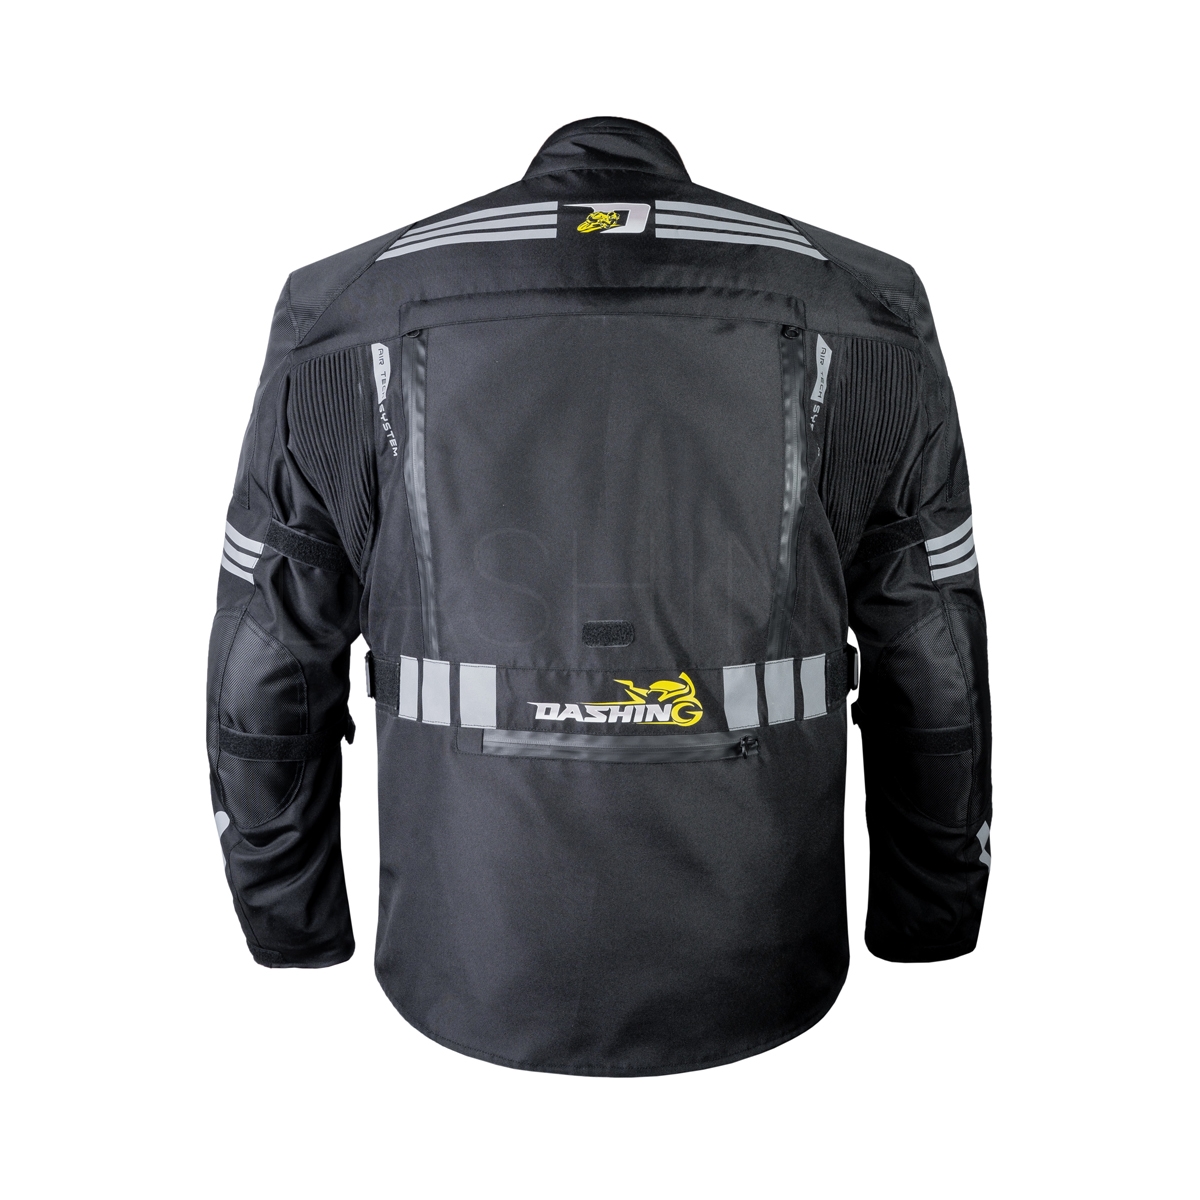 Cordura Motorbike Jacket